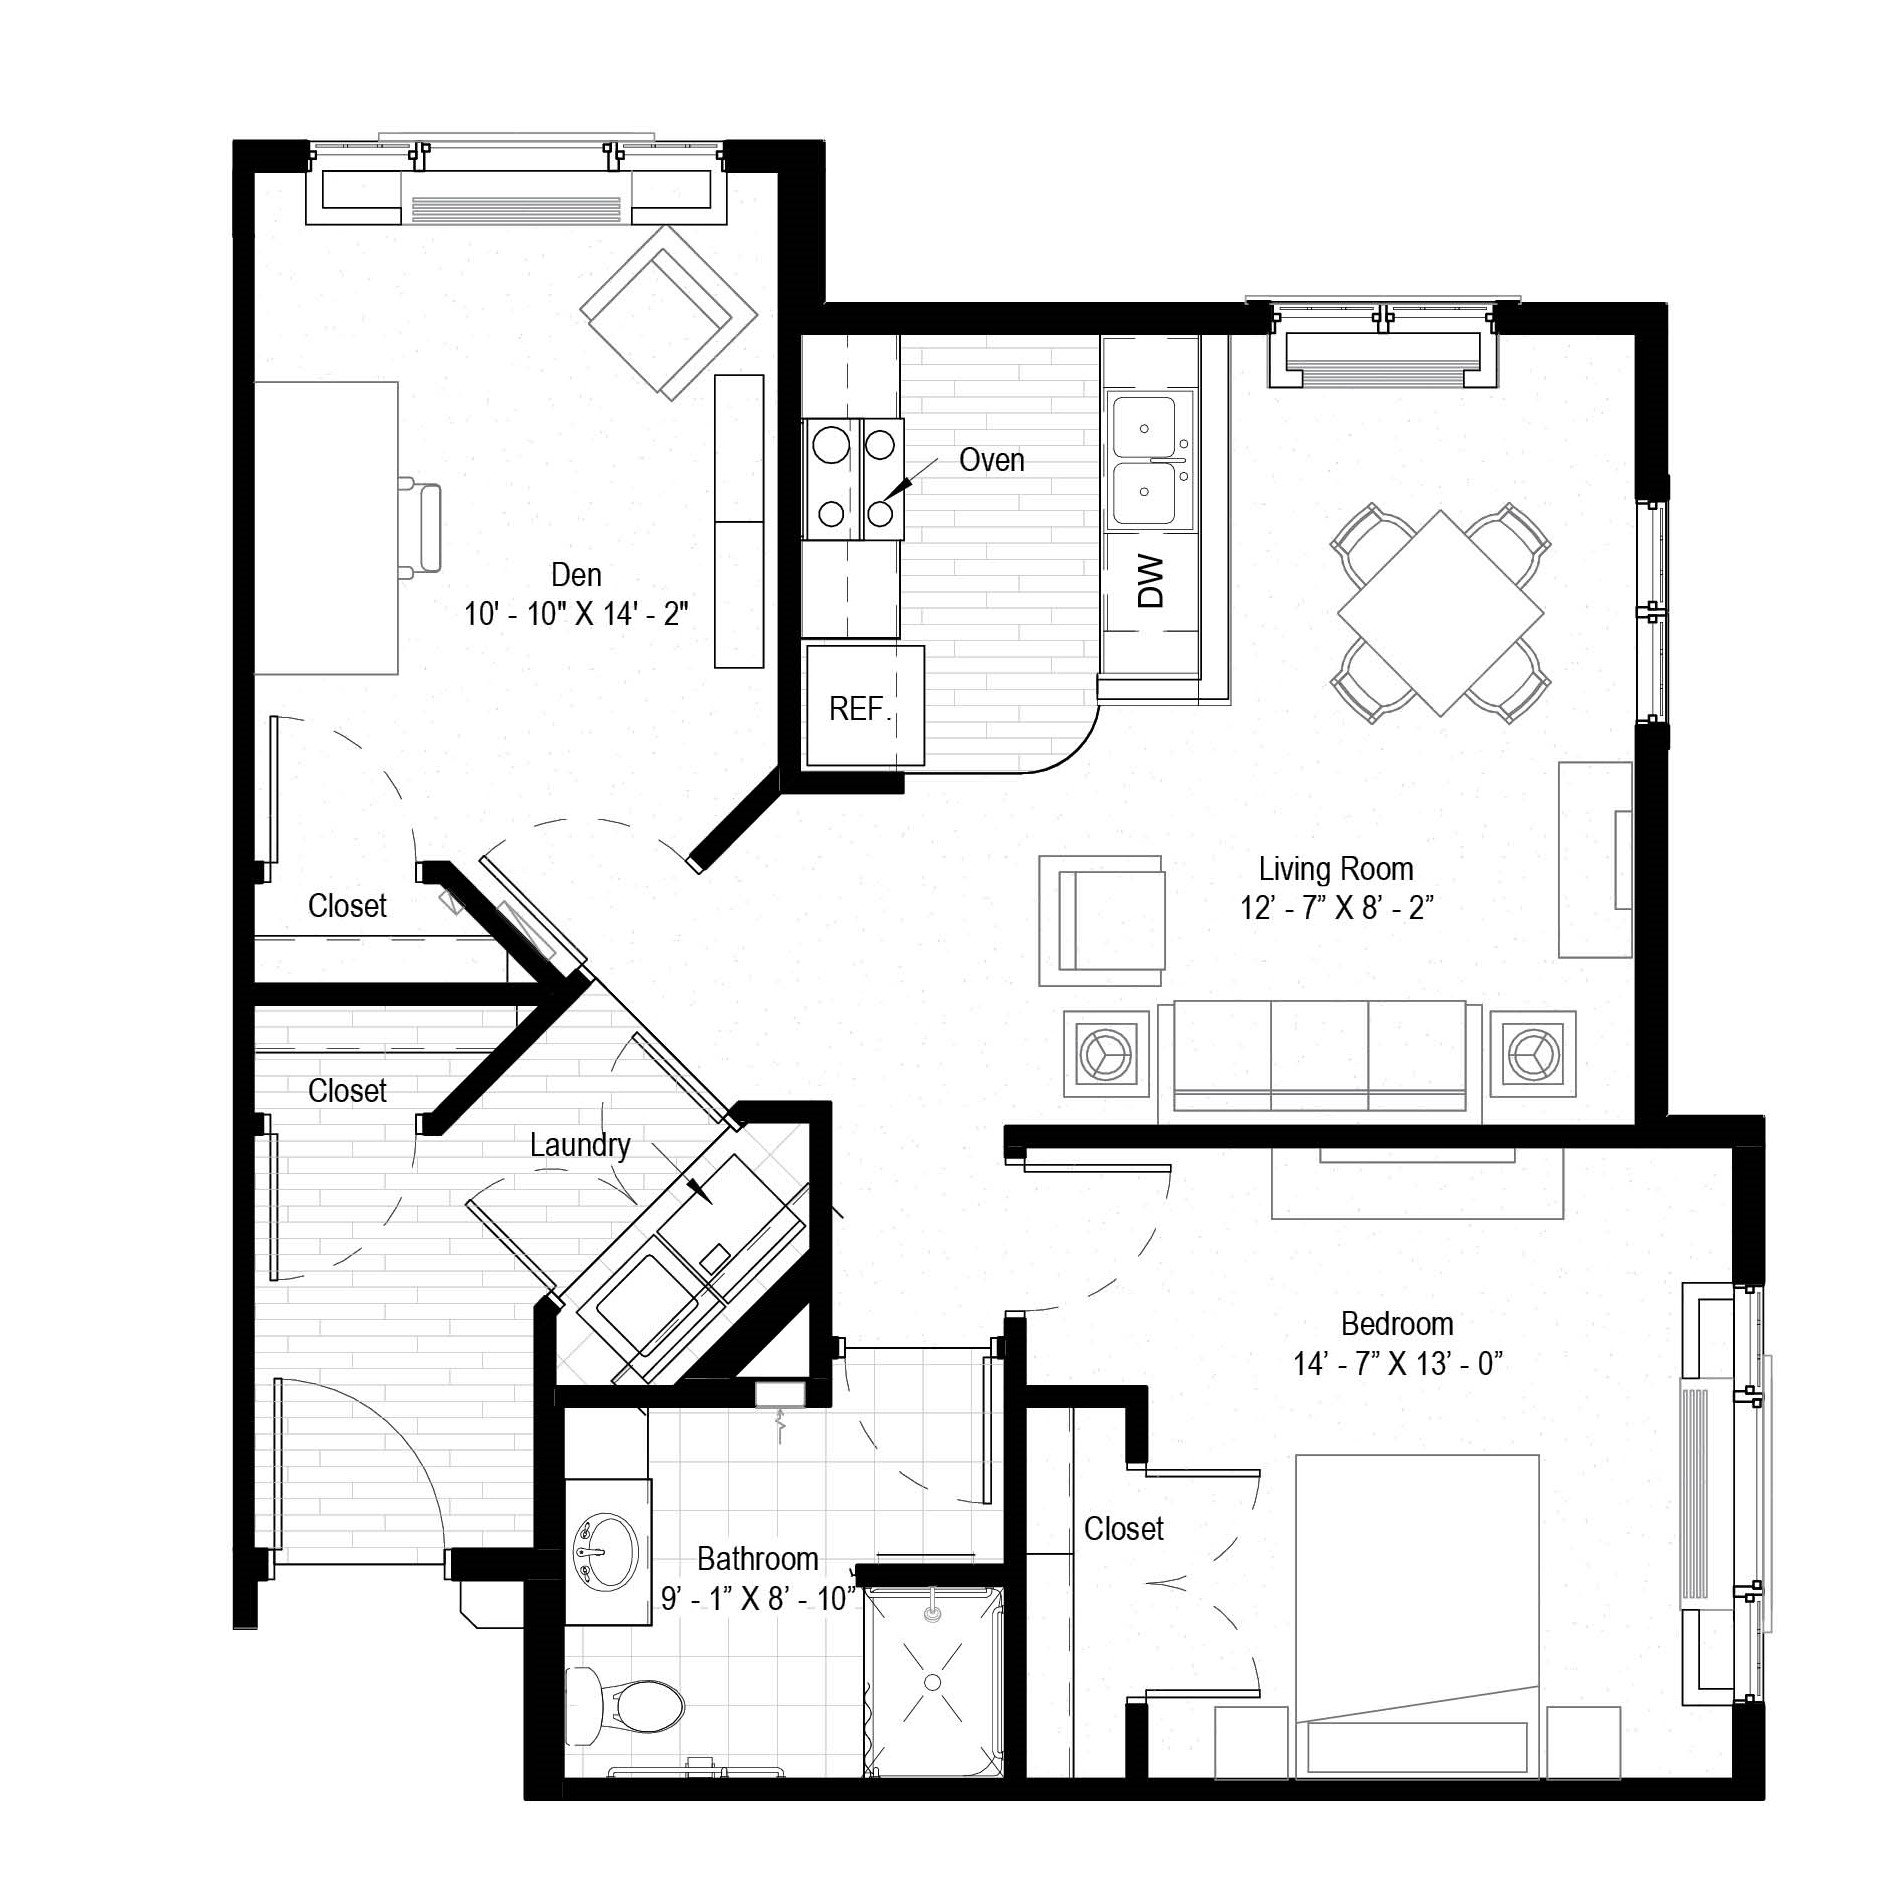 The Malmo - 951 sq ft, 1 bedroom, 1 bathroom, den